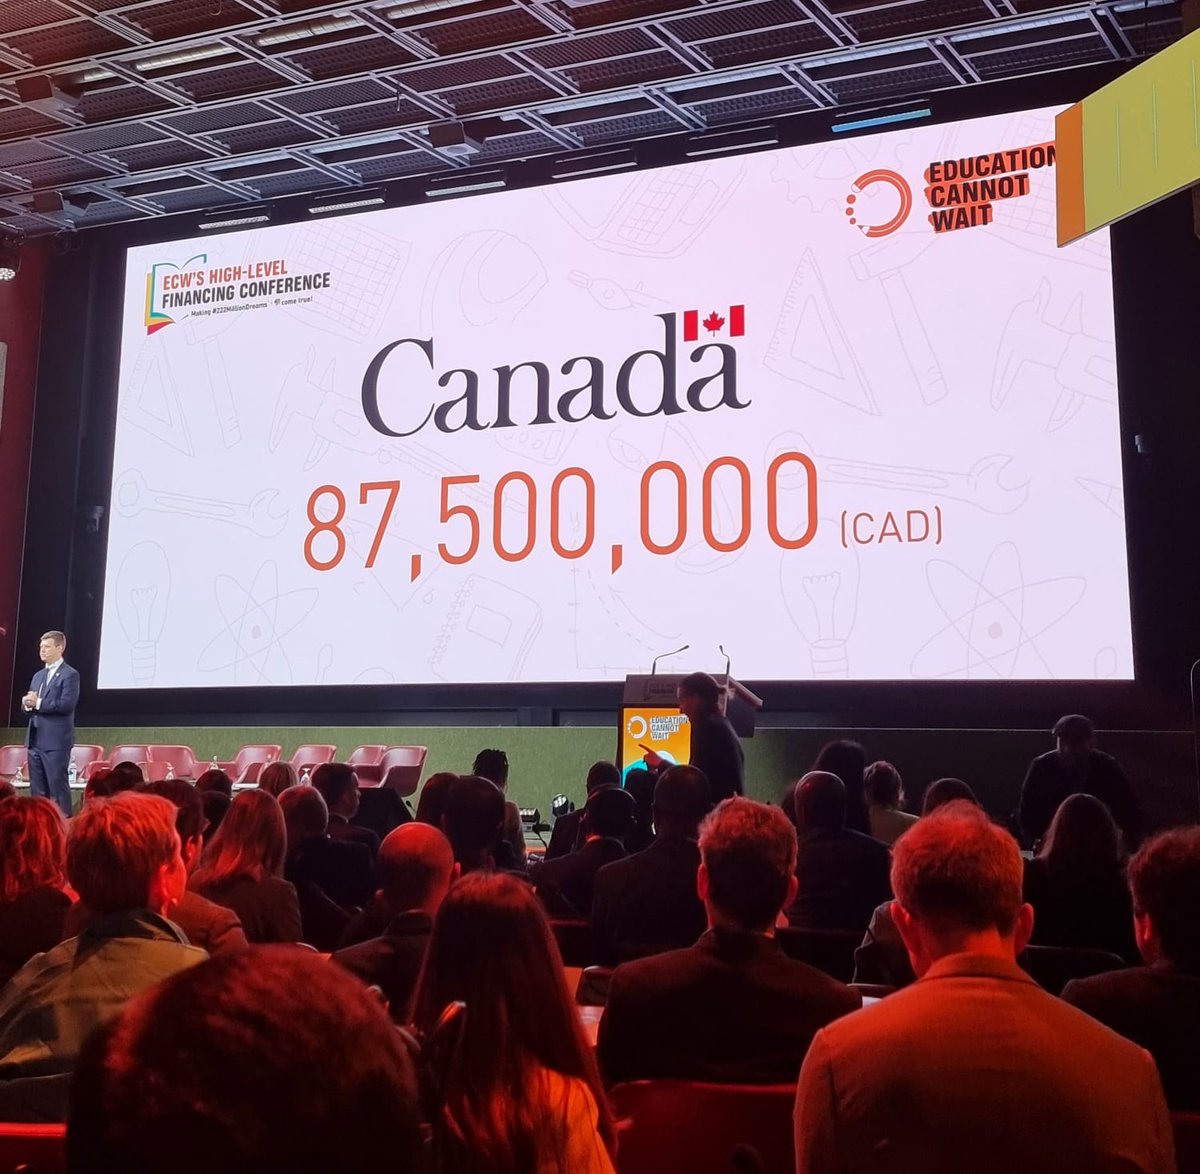 Canada has donated 87.5 million usd towards Education in Emergencies
Thank you Canada
@EduCannotWait 
#HLFC2023 #EducationCannotWait 
#EducationInEmergencies